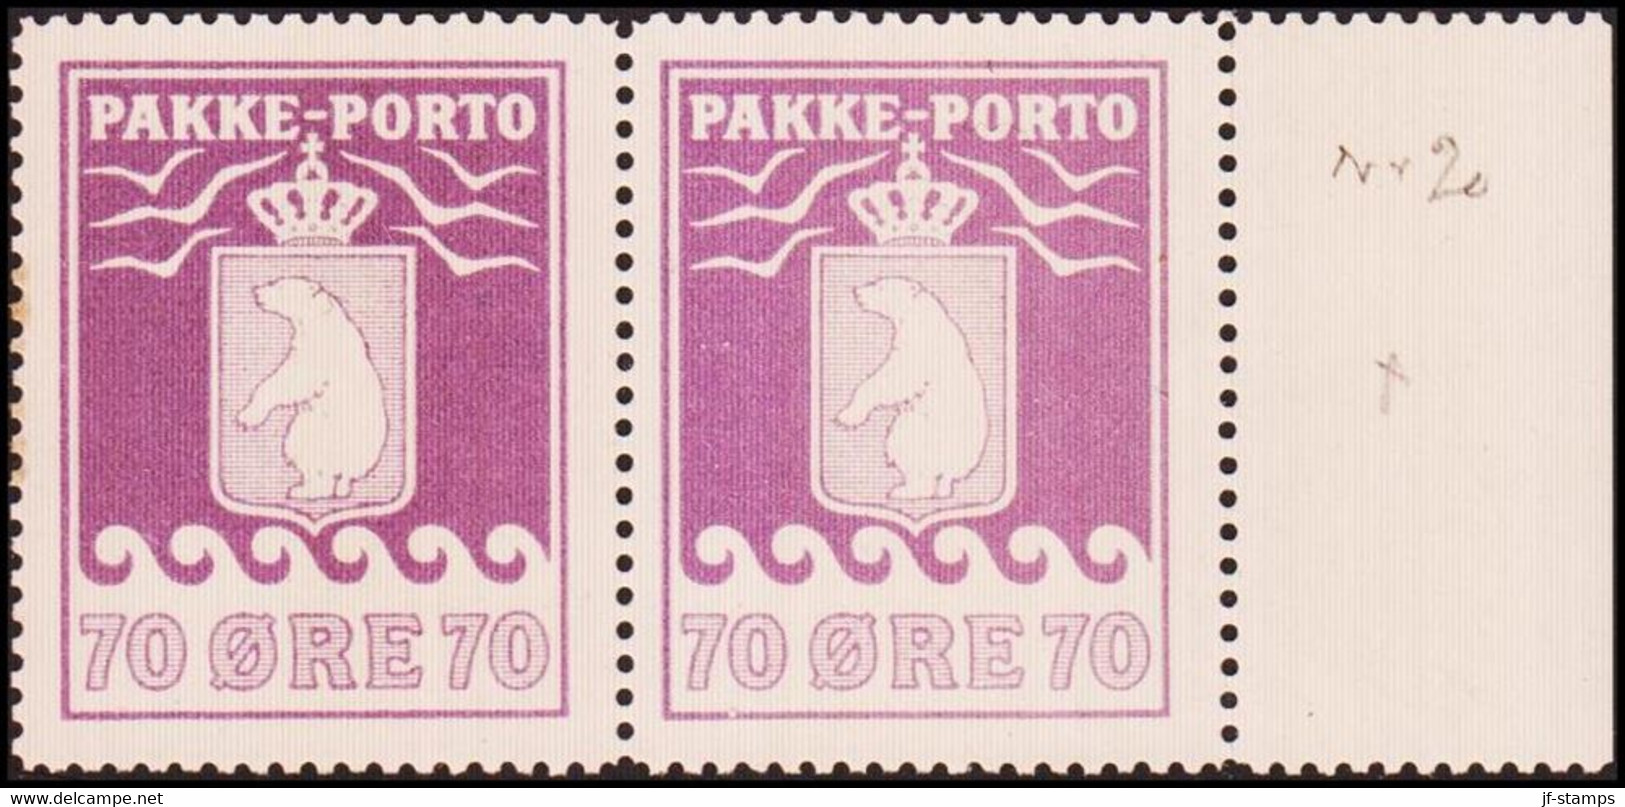 1937. PAKKE PORTO. 70 øre Pale Violet. Andreasen & Lachmann Litho. Perf. 11. Never Hi... (Michel 13) - JF415146 - Paquetes Postales